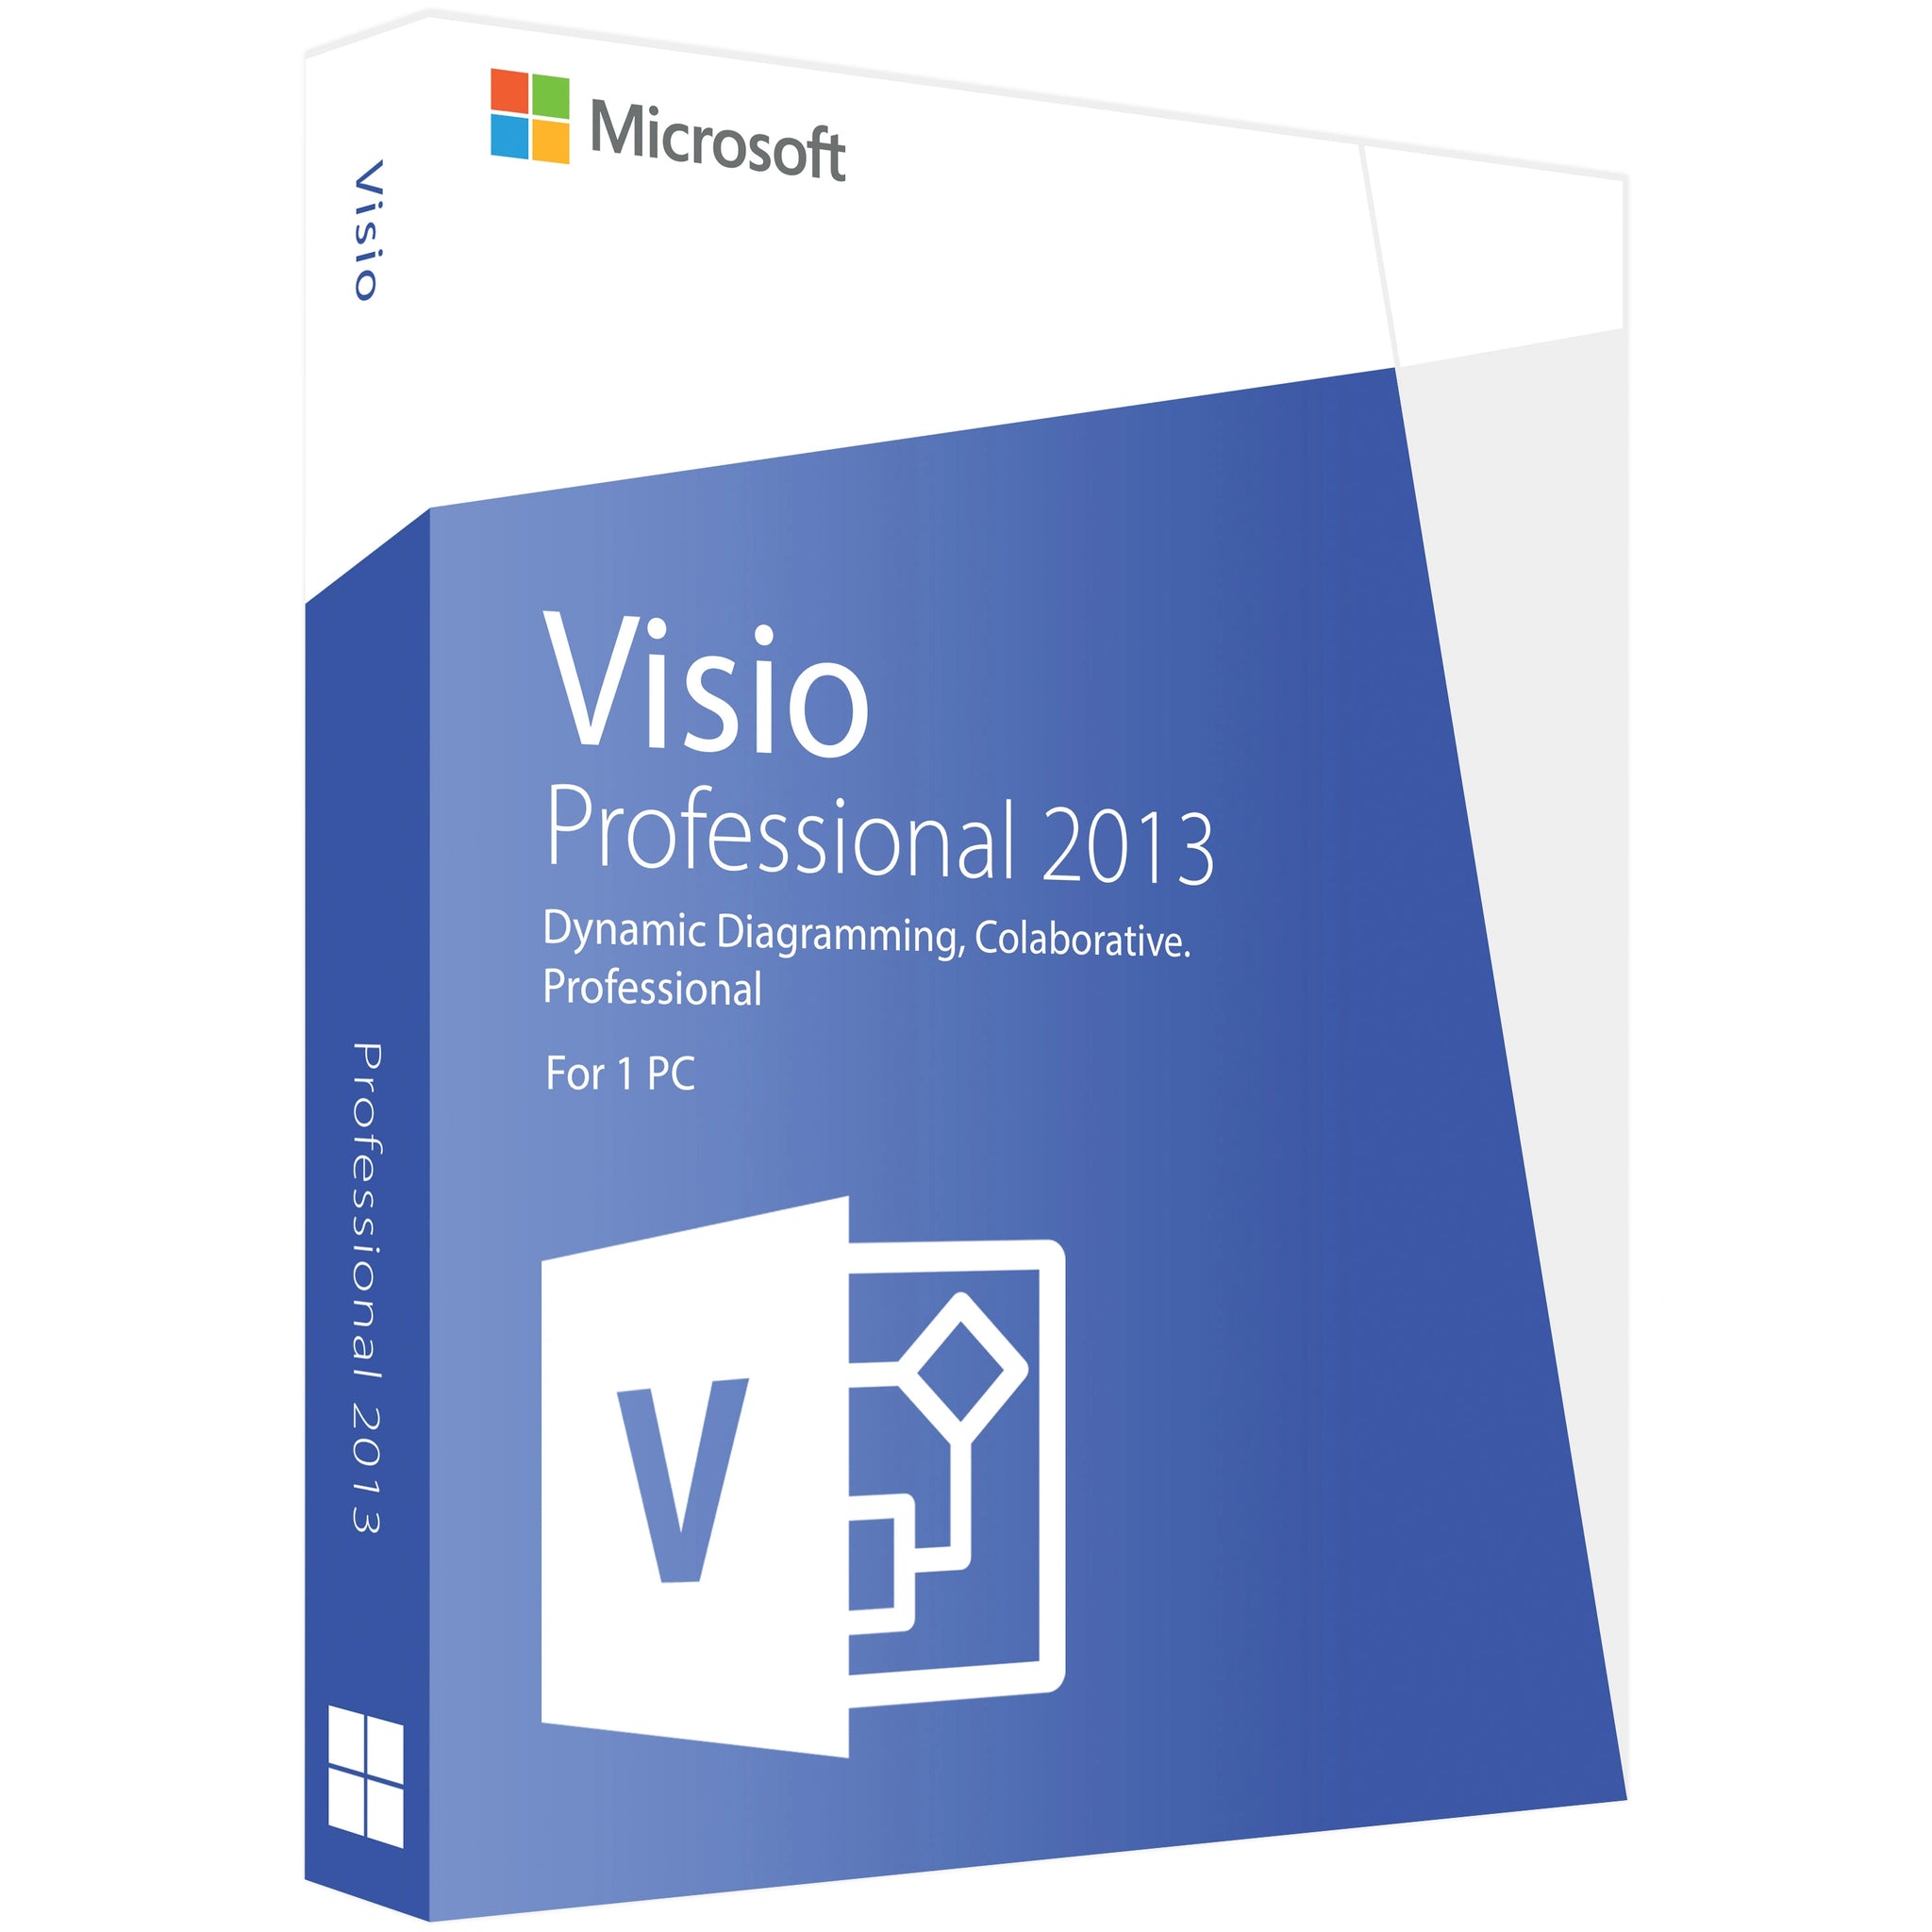 Microsoft Visio 2013 Professional- Lifetime License Key for 1 PC